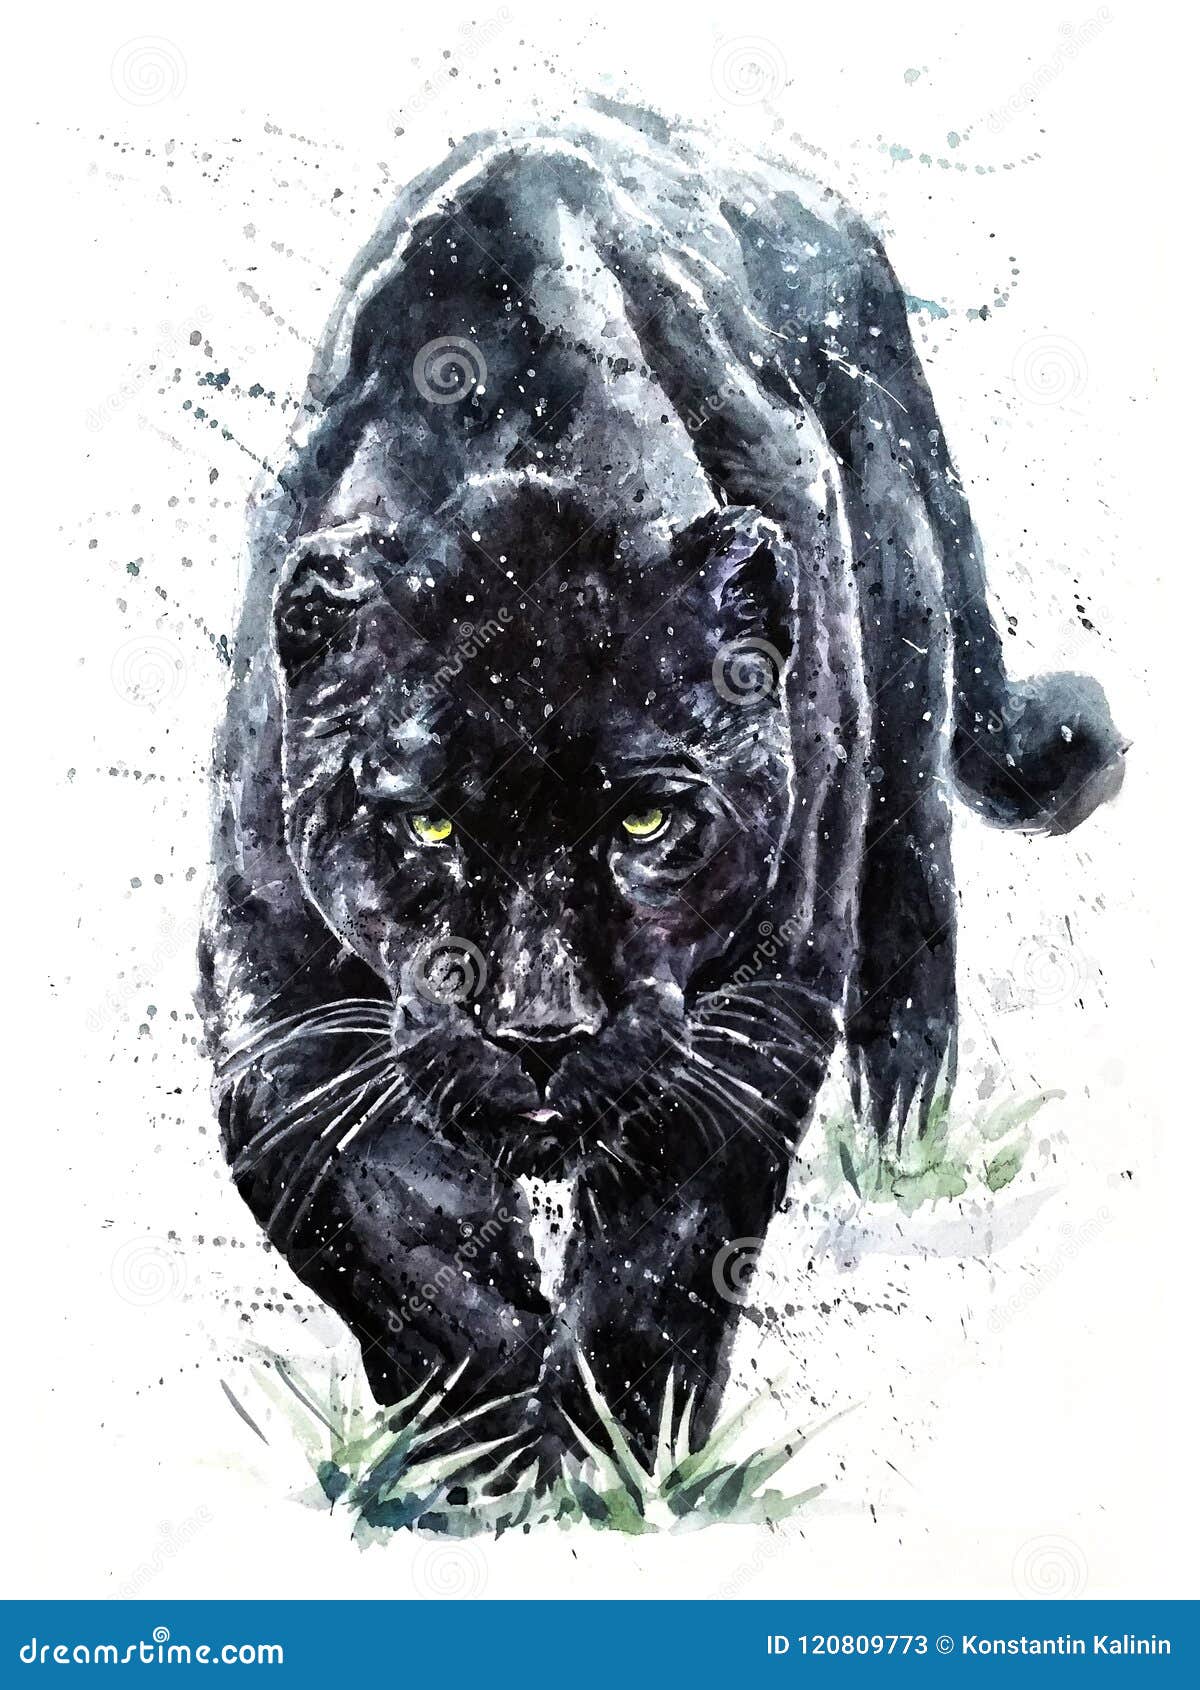 panther watercolor predator animals wildlife painting